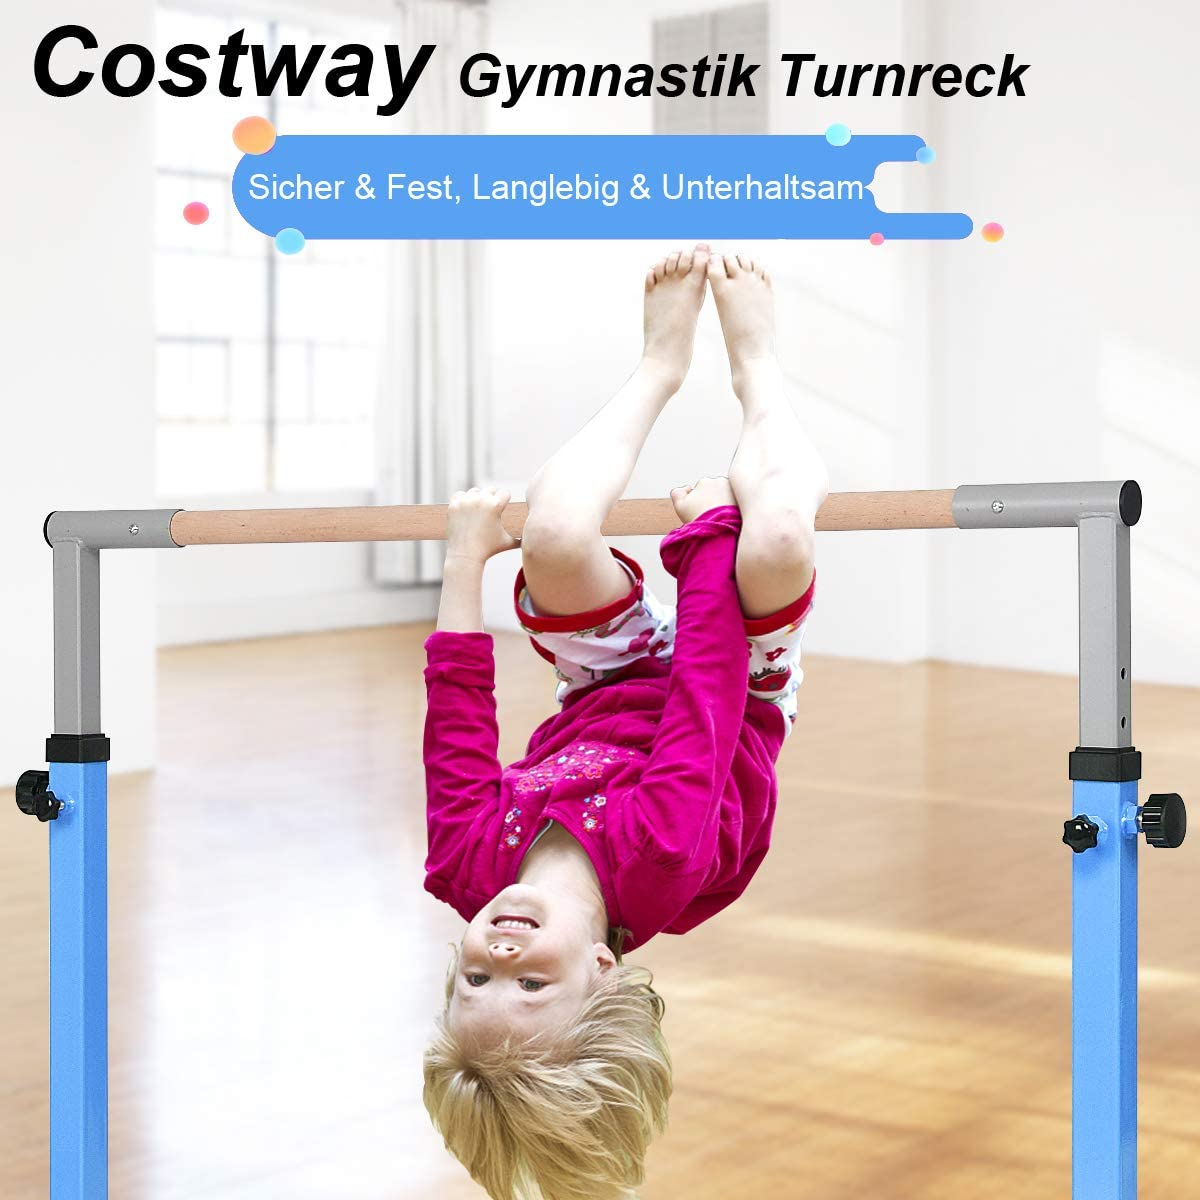 COSTWAY Gymnastik Reckanlage, Turnreck Blau